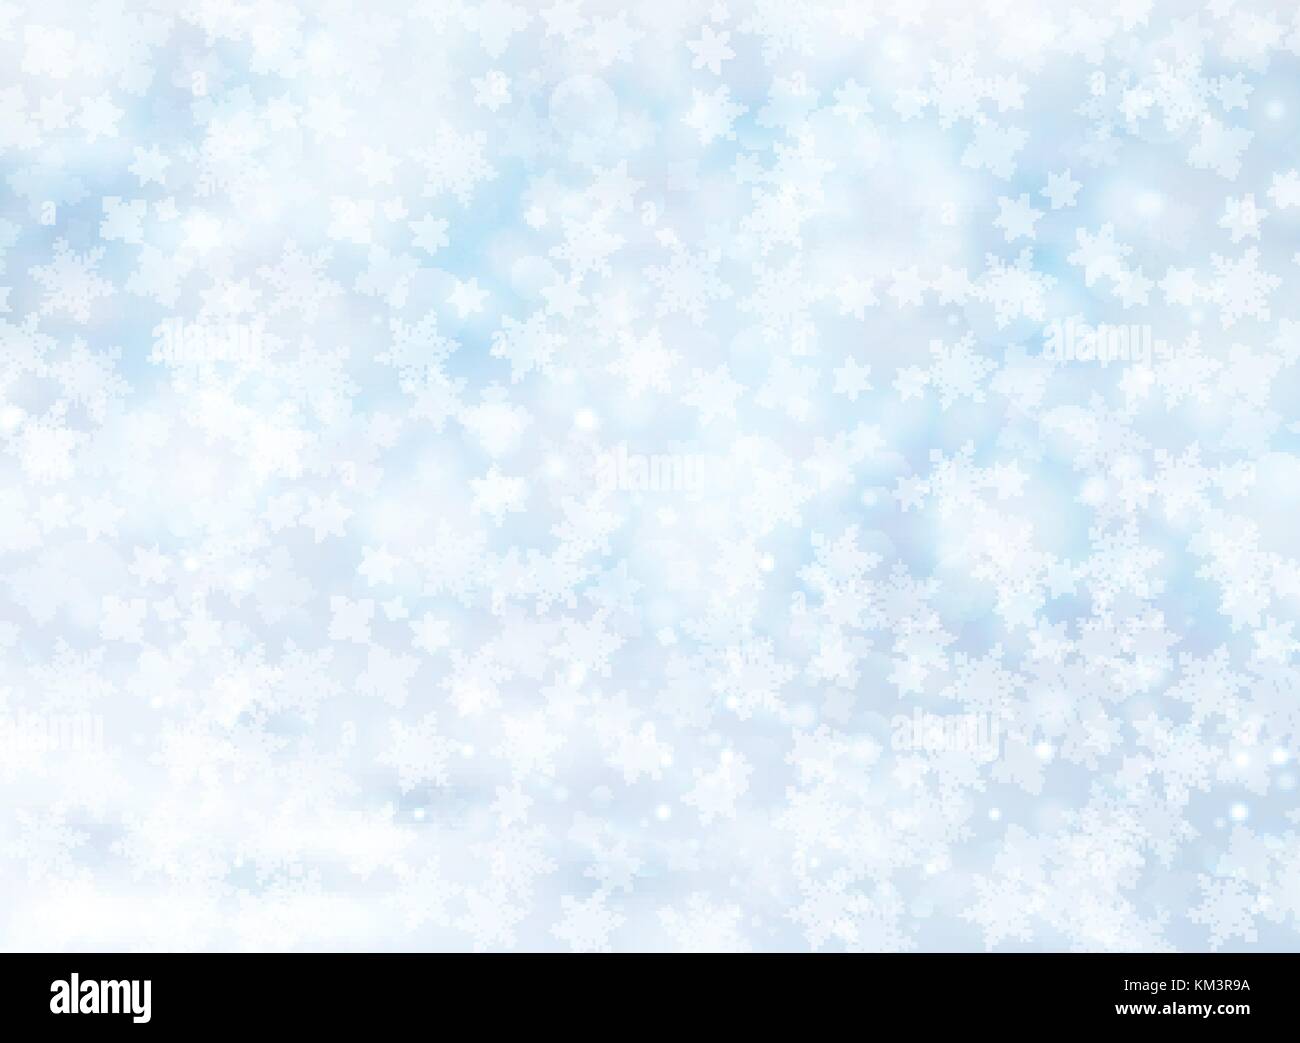 White Snowflakes On Dark Blue Background Stock Illustration